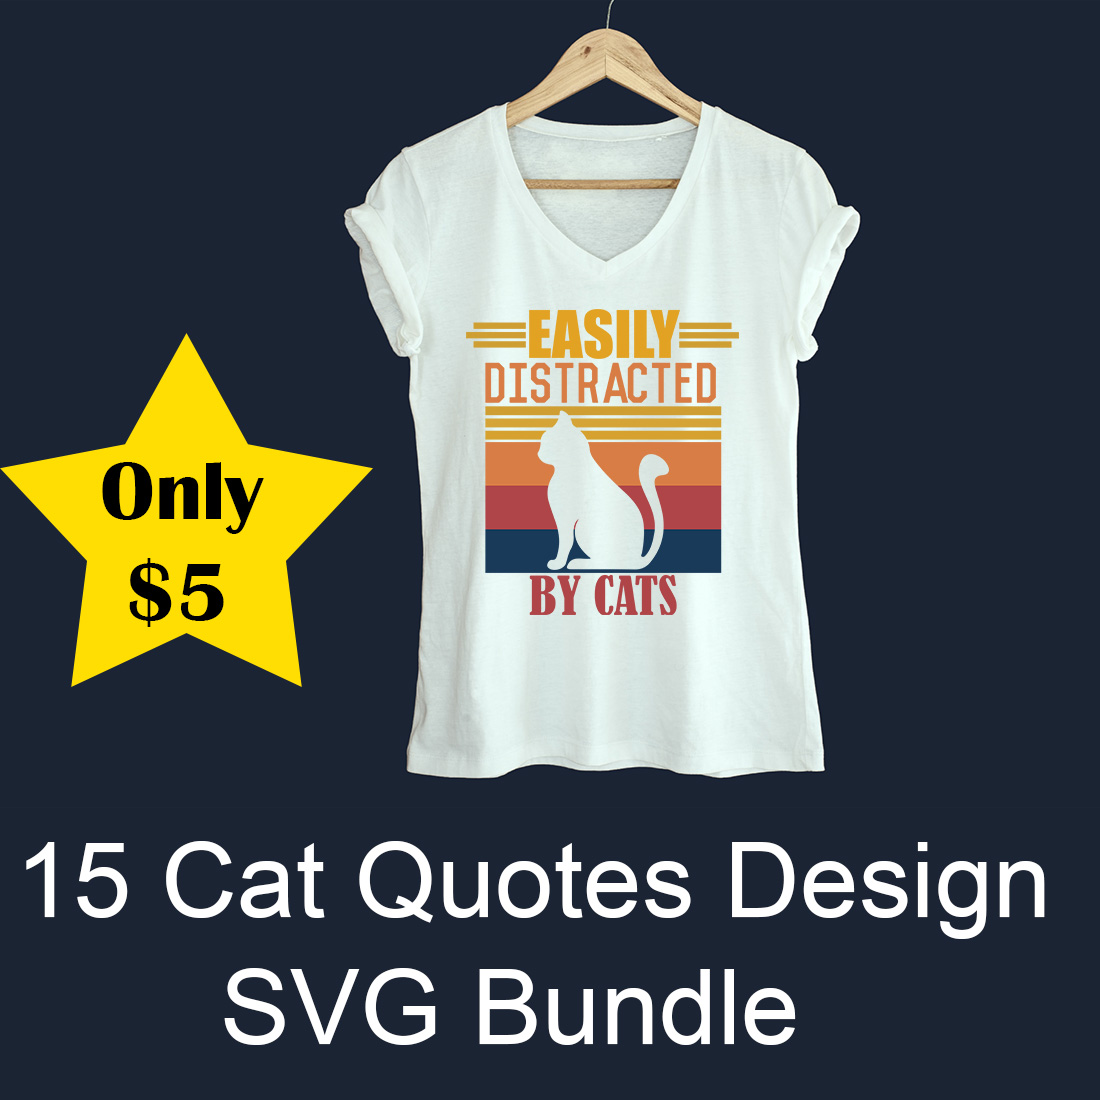 Cat Typography Design SVG Bundle cover image.